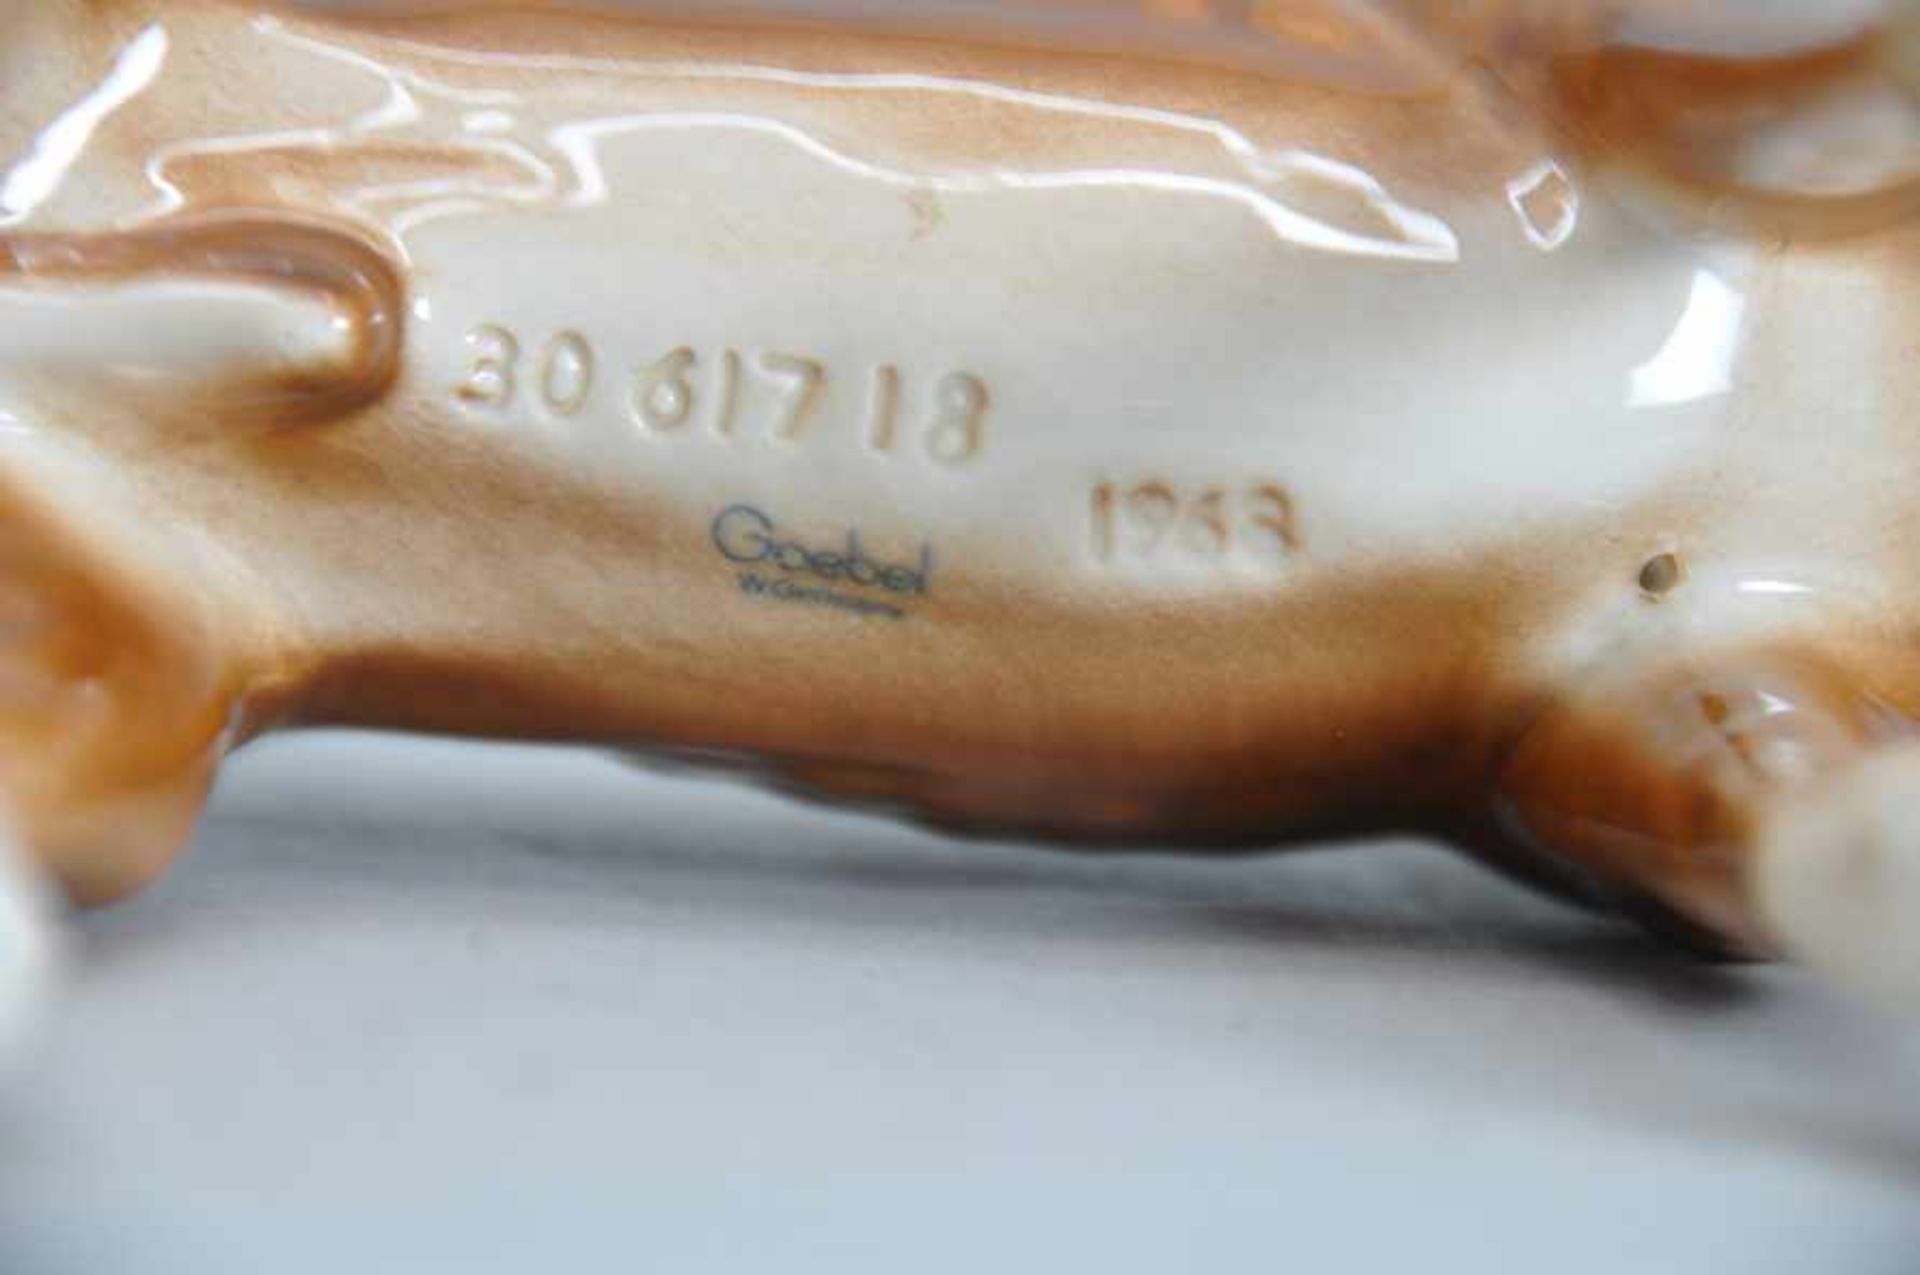 Boxer, Porzellanfigur, polychrom bemalt. Goebel, Modellnummer 3061718, Jahr 1968. Maße ca. 21 x 19 x - Bild 7 aus 7